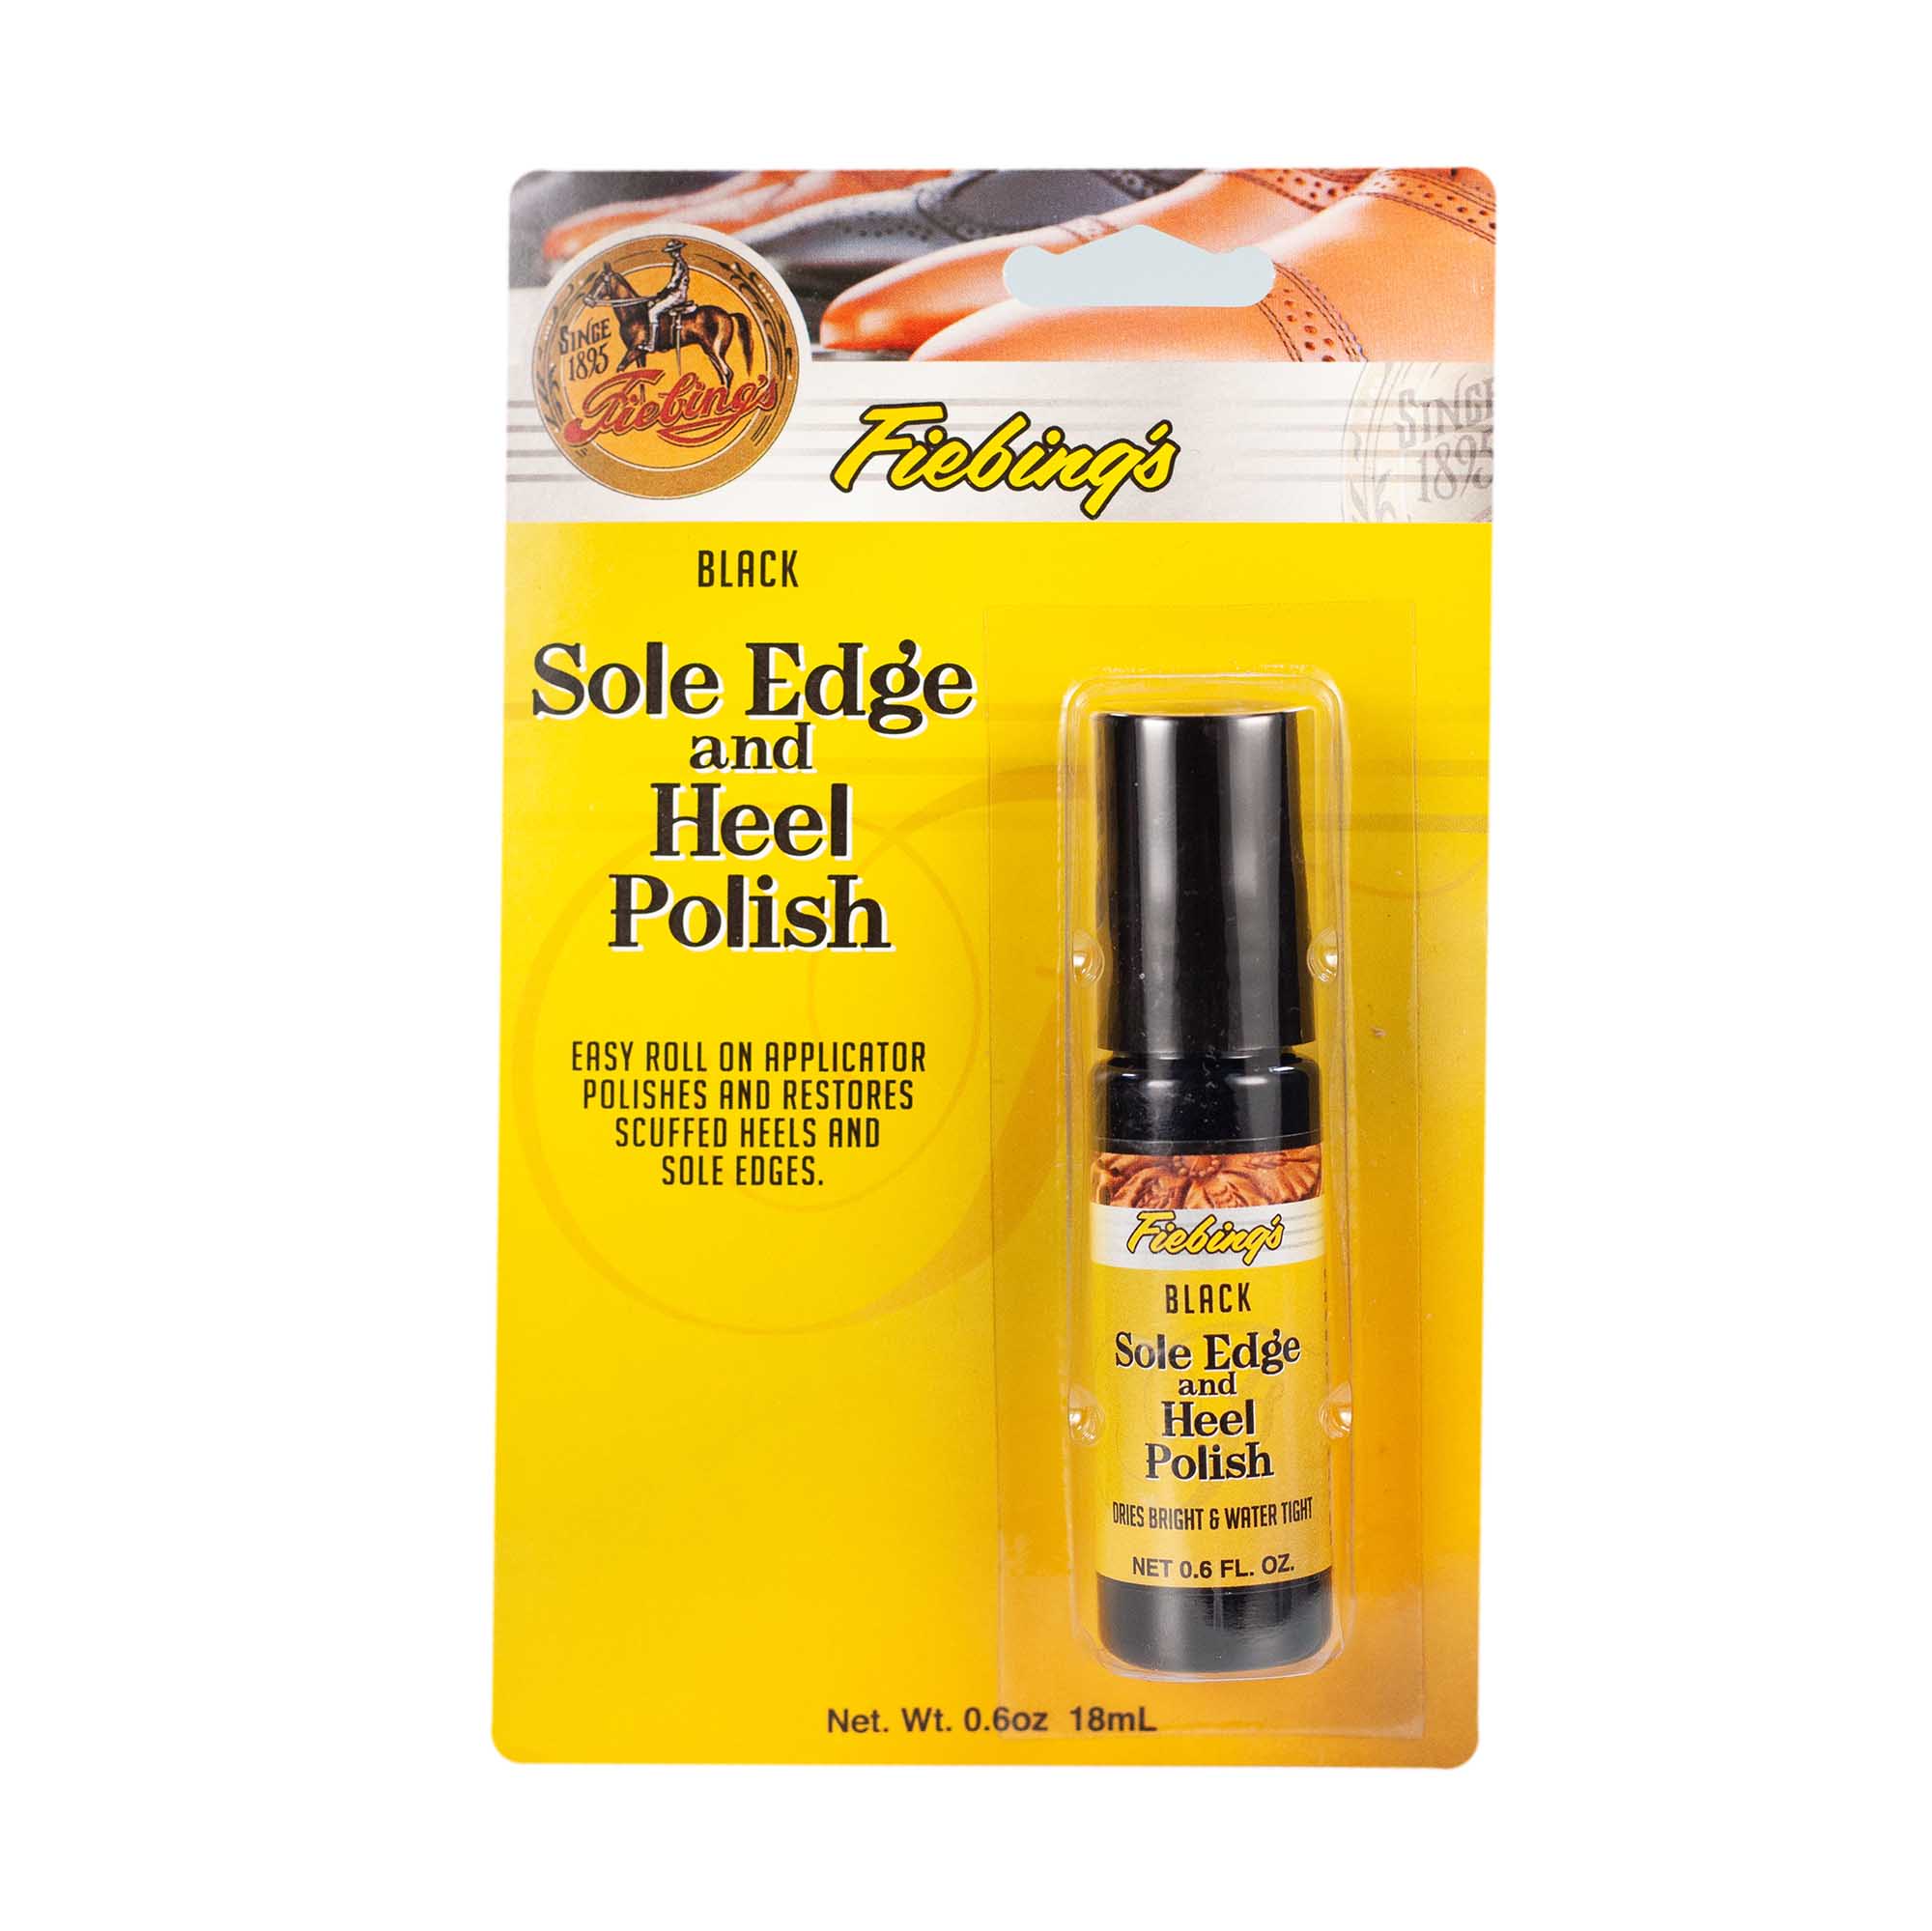 Sole Edge and Heel Polish